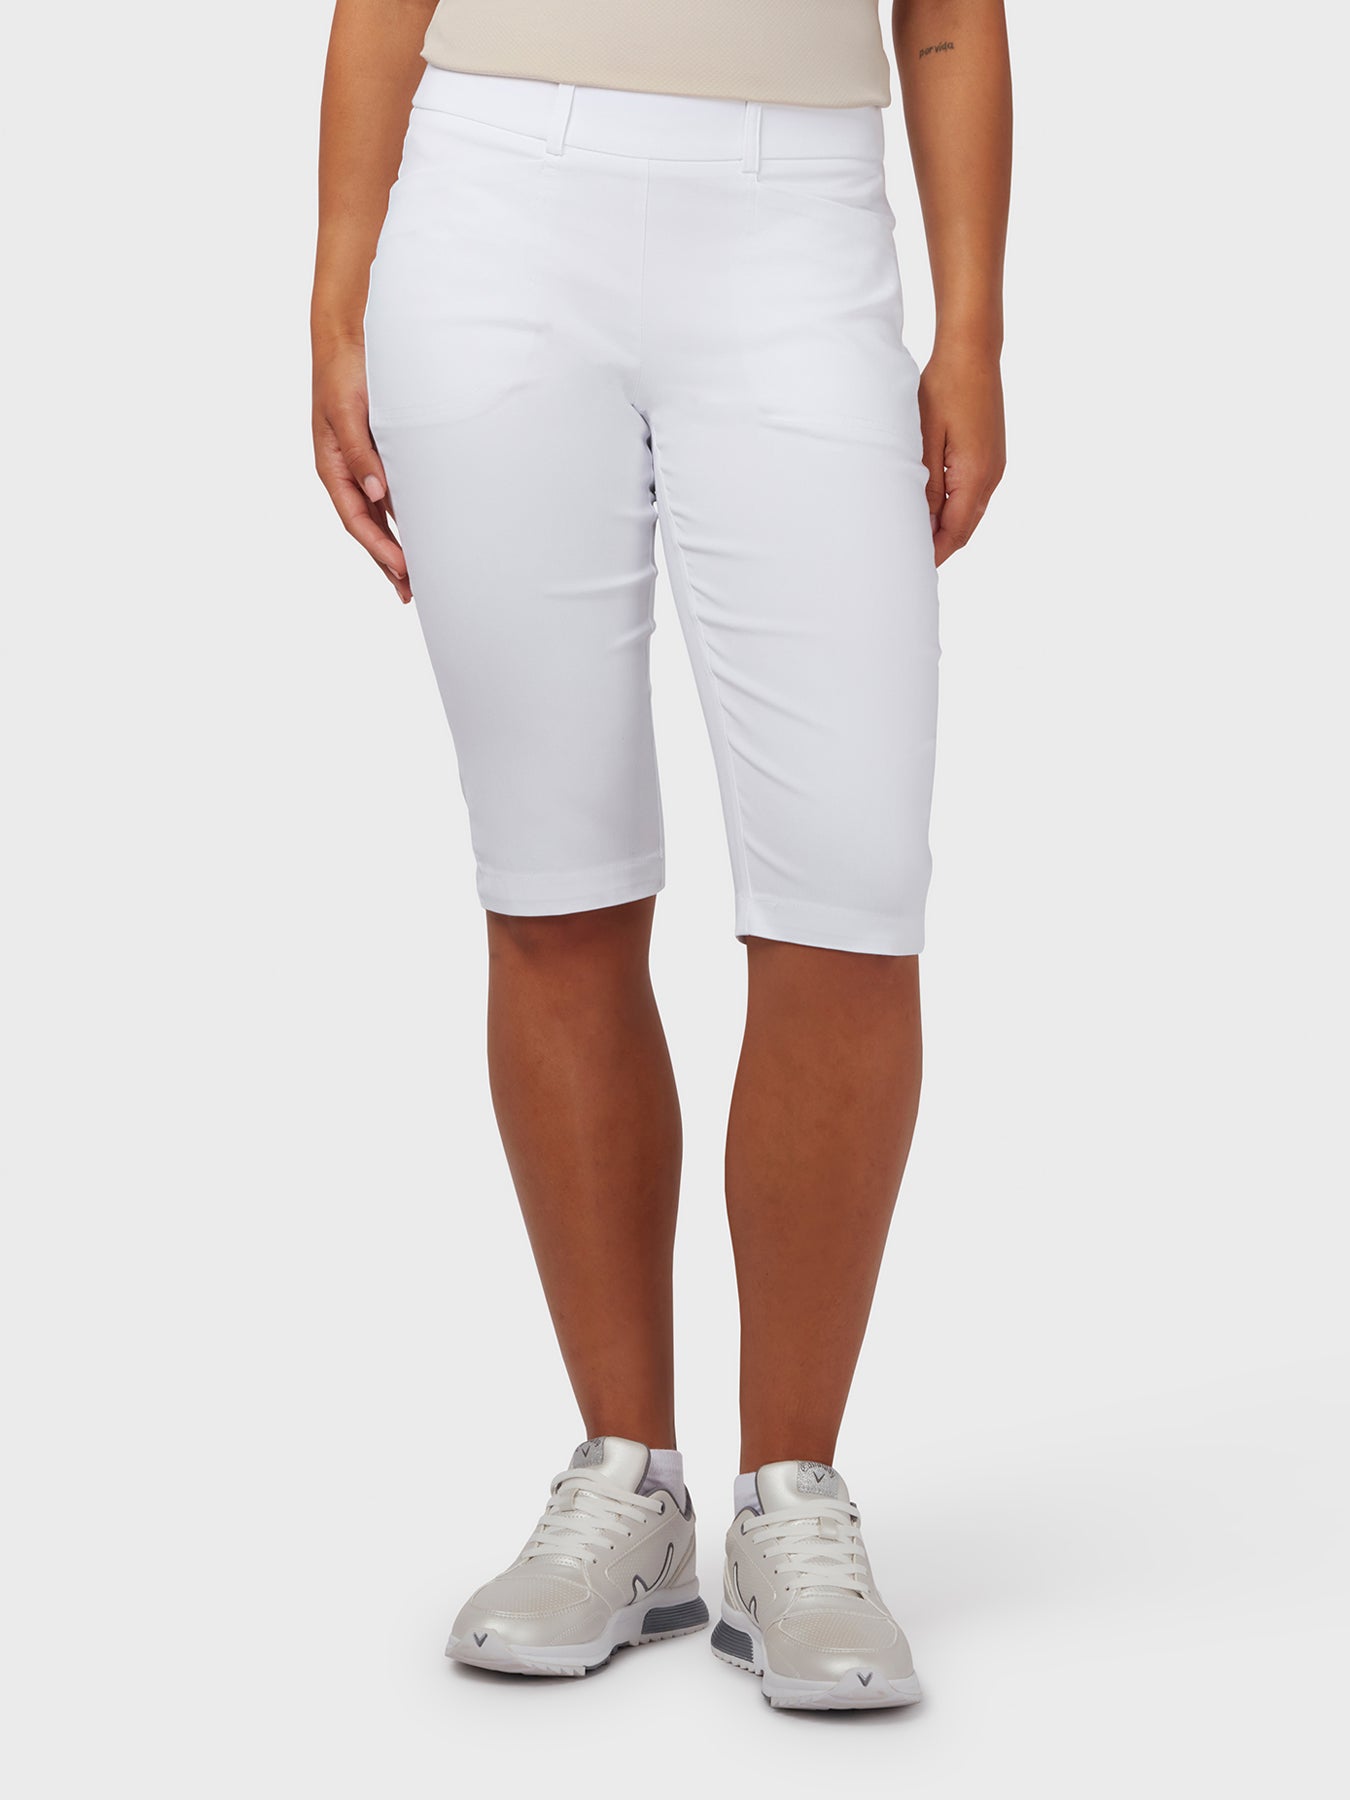 View 34 Truesculpt Womens Shorts In Brilliant White Brilliant White XS information